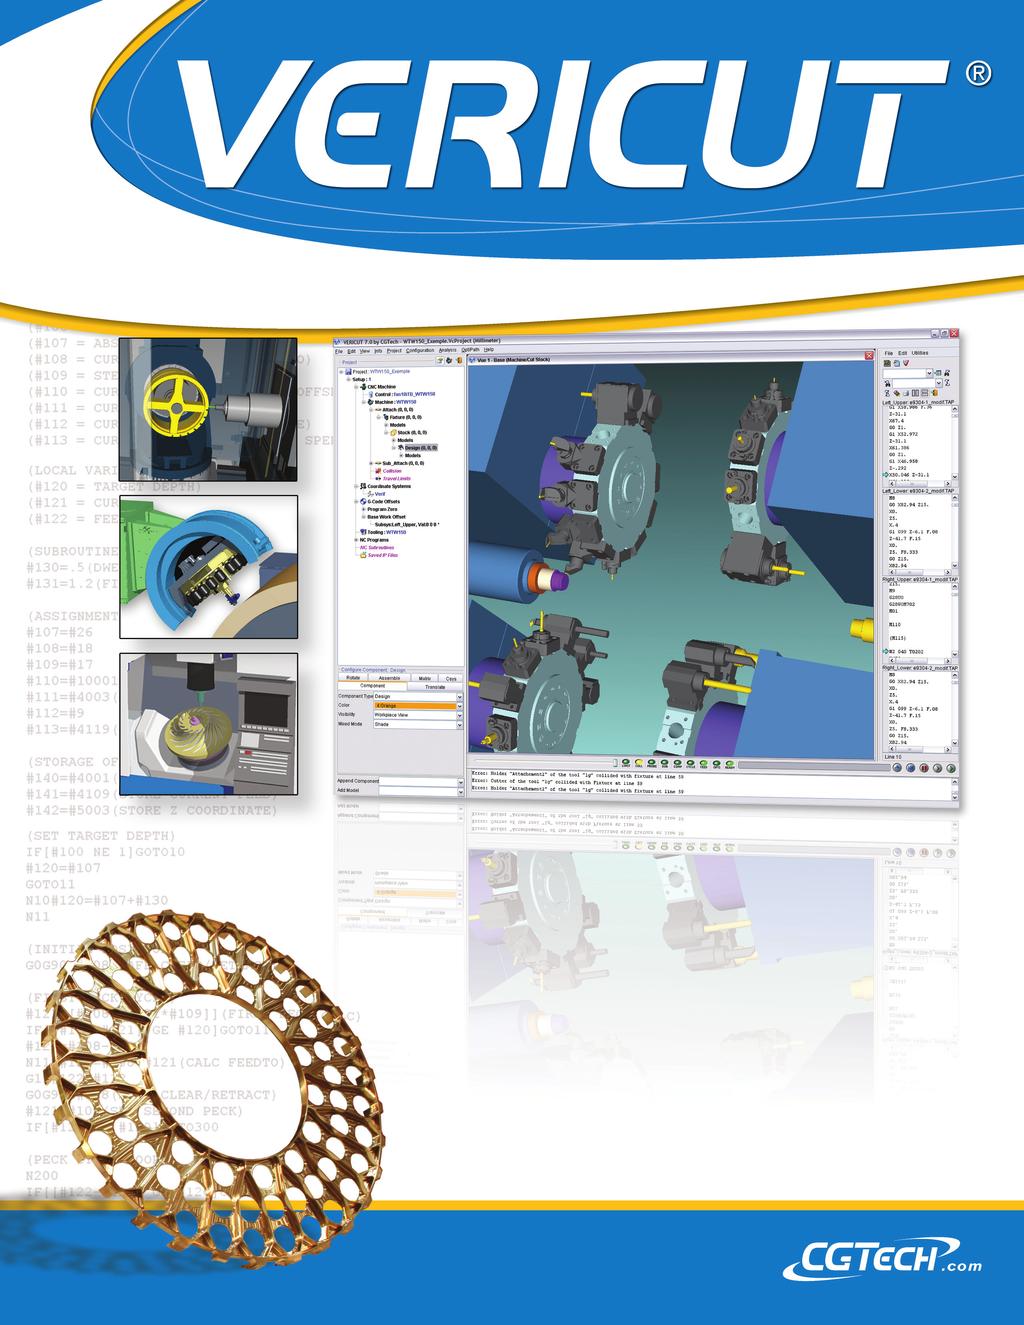 VERICUT은 삼성에서 개발된 자동 CAM